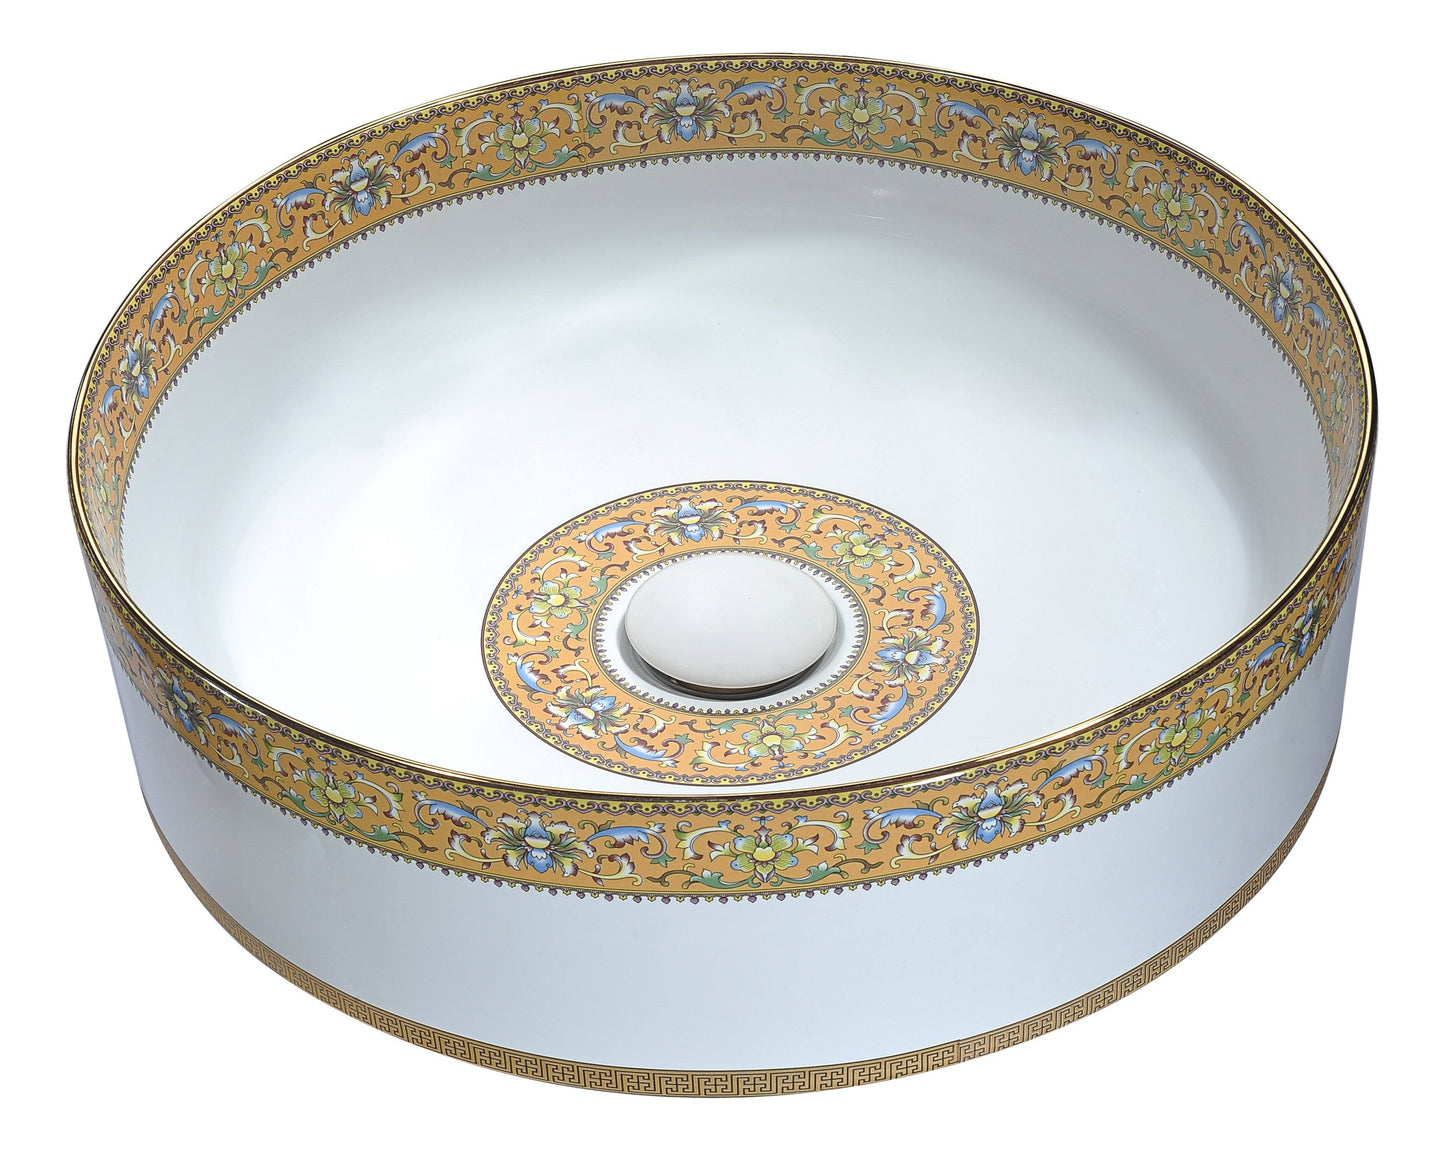 Byzantian Series Ceramic Vessel Sink in Mosaic Gold - Luxe Bathroom Vanities